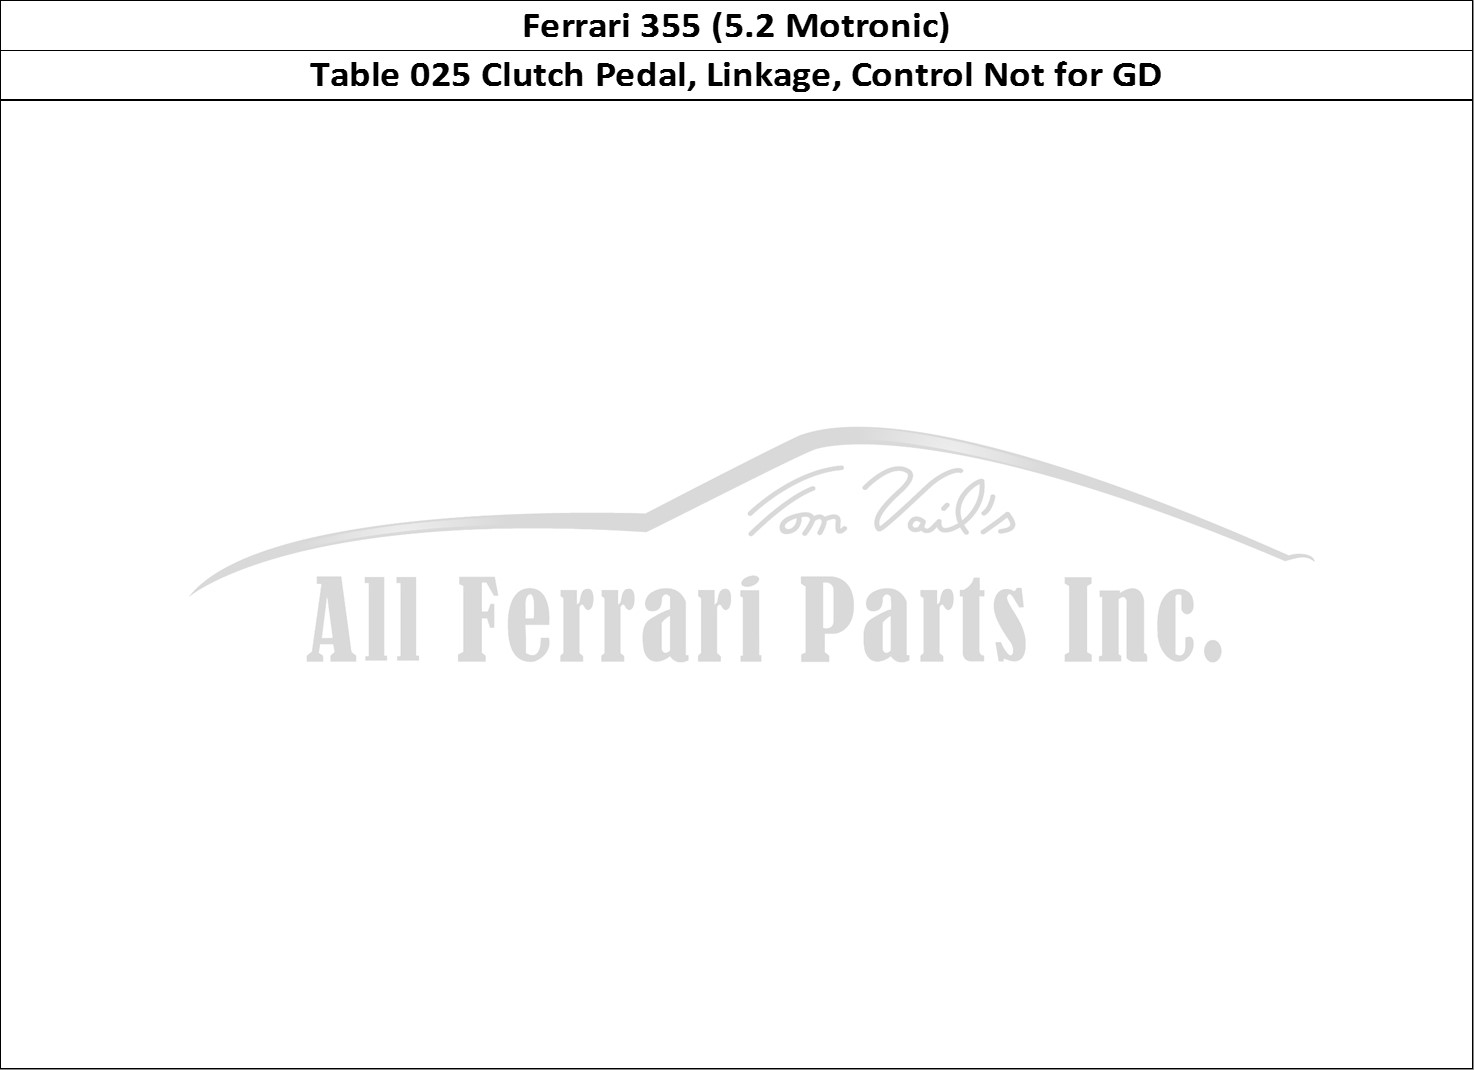 Ferrari Parts Ferrari 355 (5.2 Motronic) Page 025 Clutch Release Control an